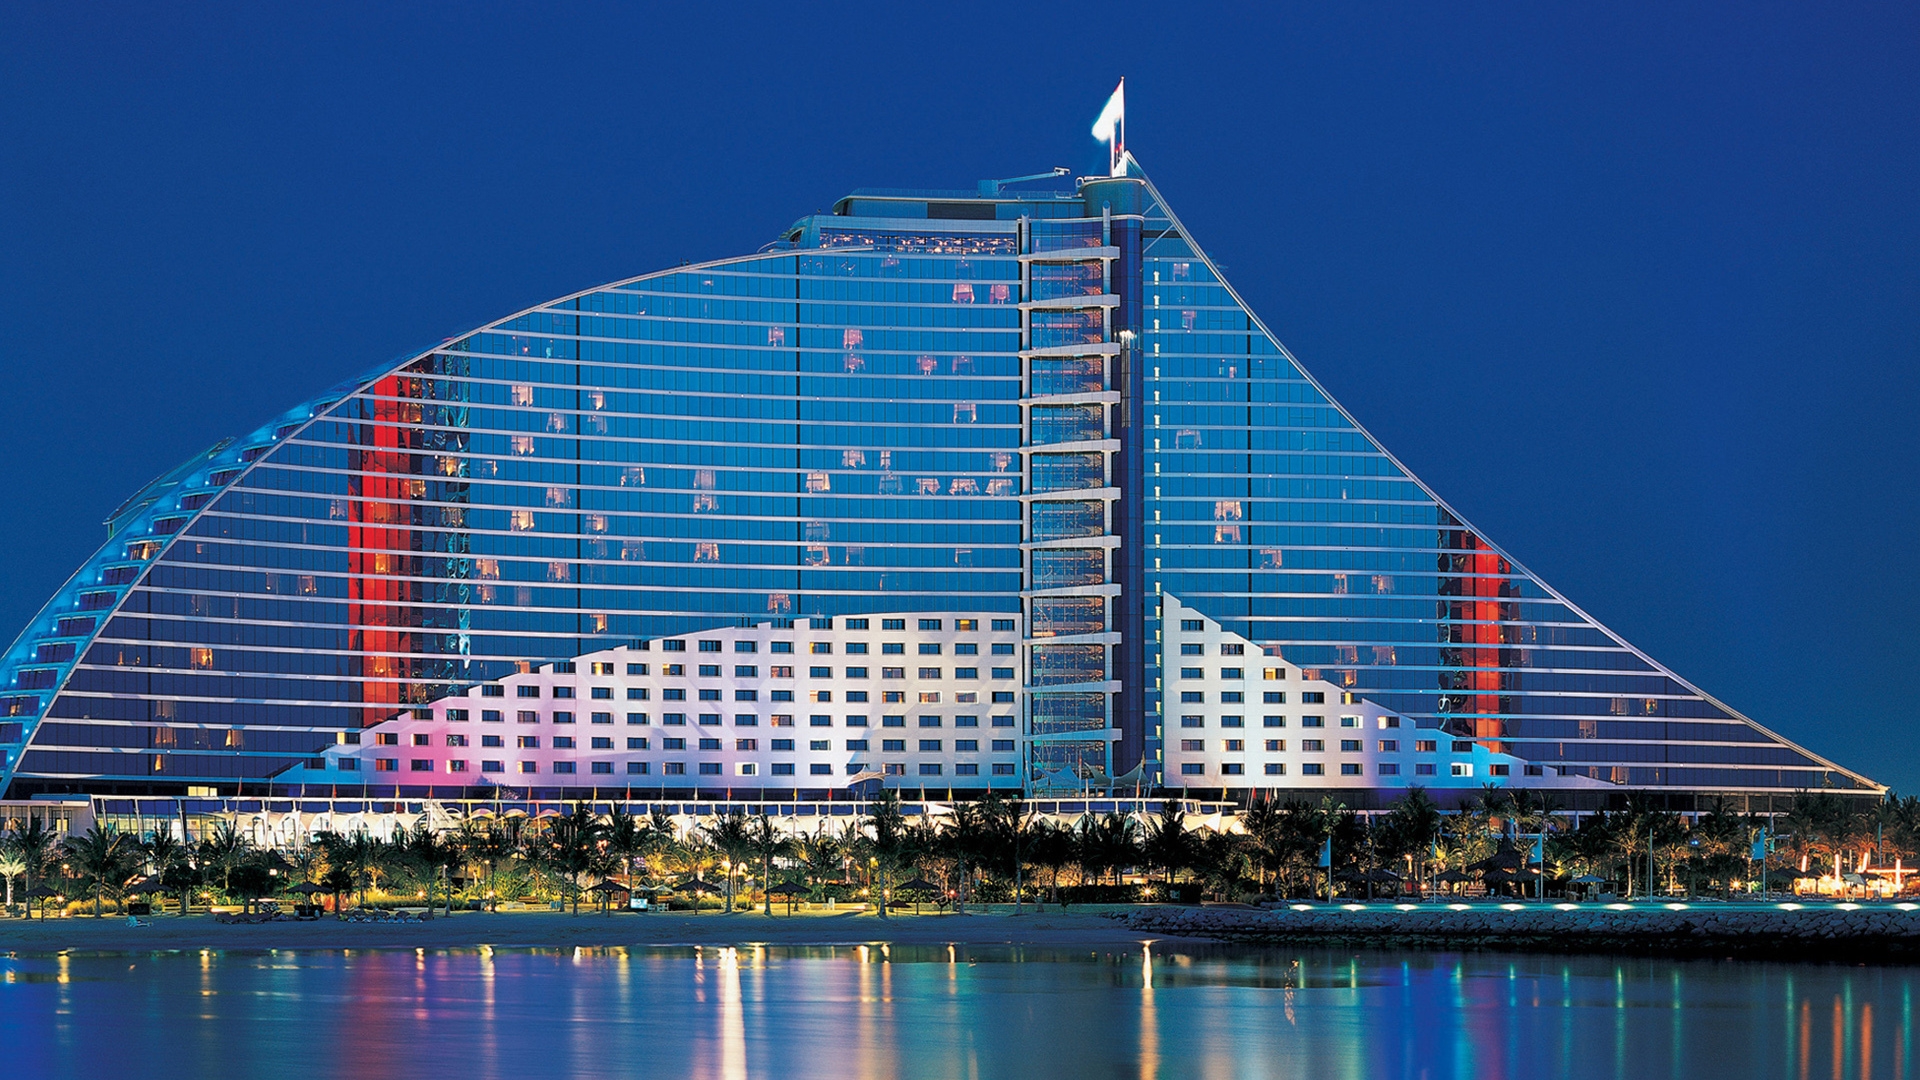 Jumeirah Beach Hotel Dubai for 1920 x 1080 HDTV 1080p resolution